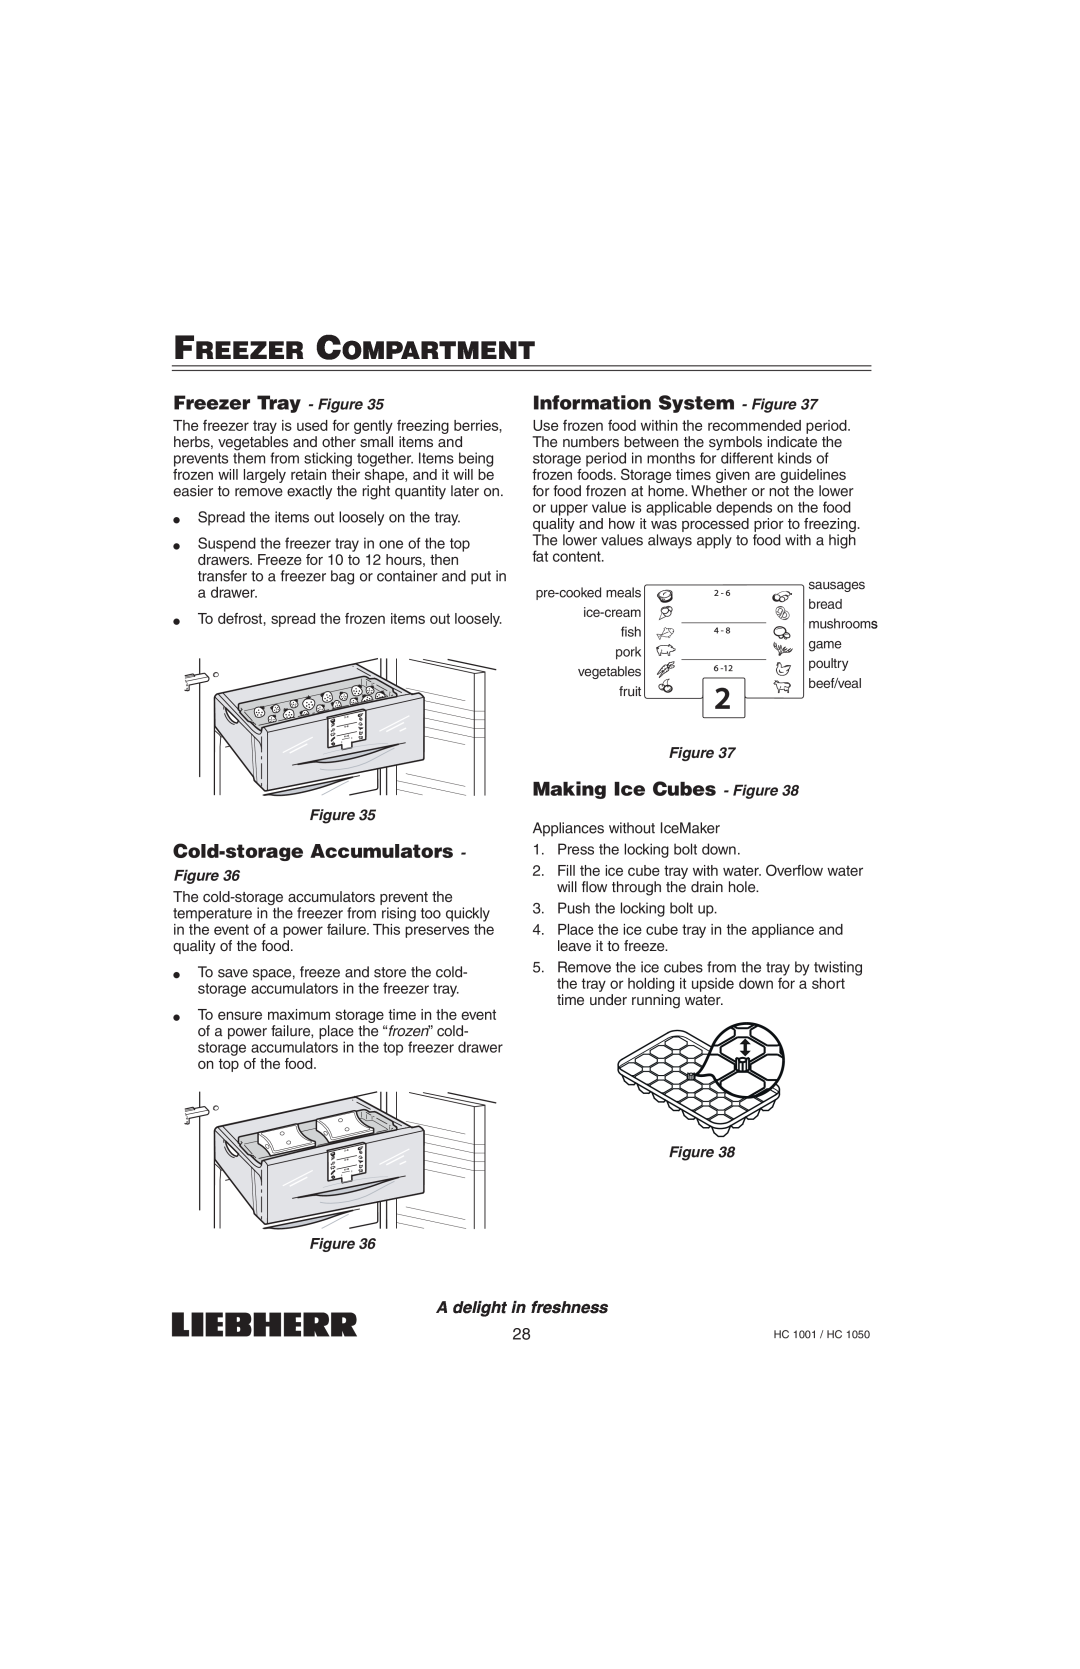 Liebherr HC1001 Freezer Tray - Figure, Information System - Figure, Cold-storage Accumulators, Making Ice Cubes - Figure 